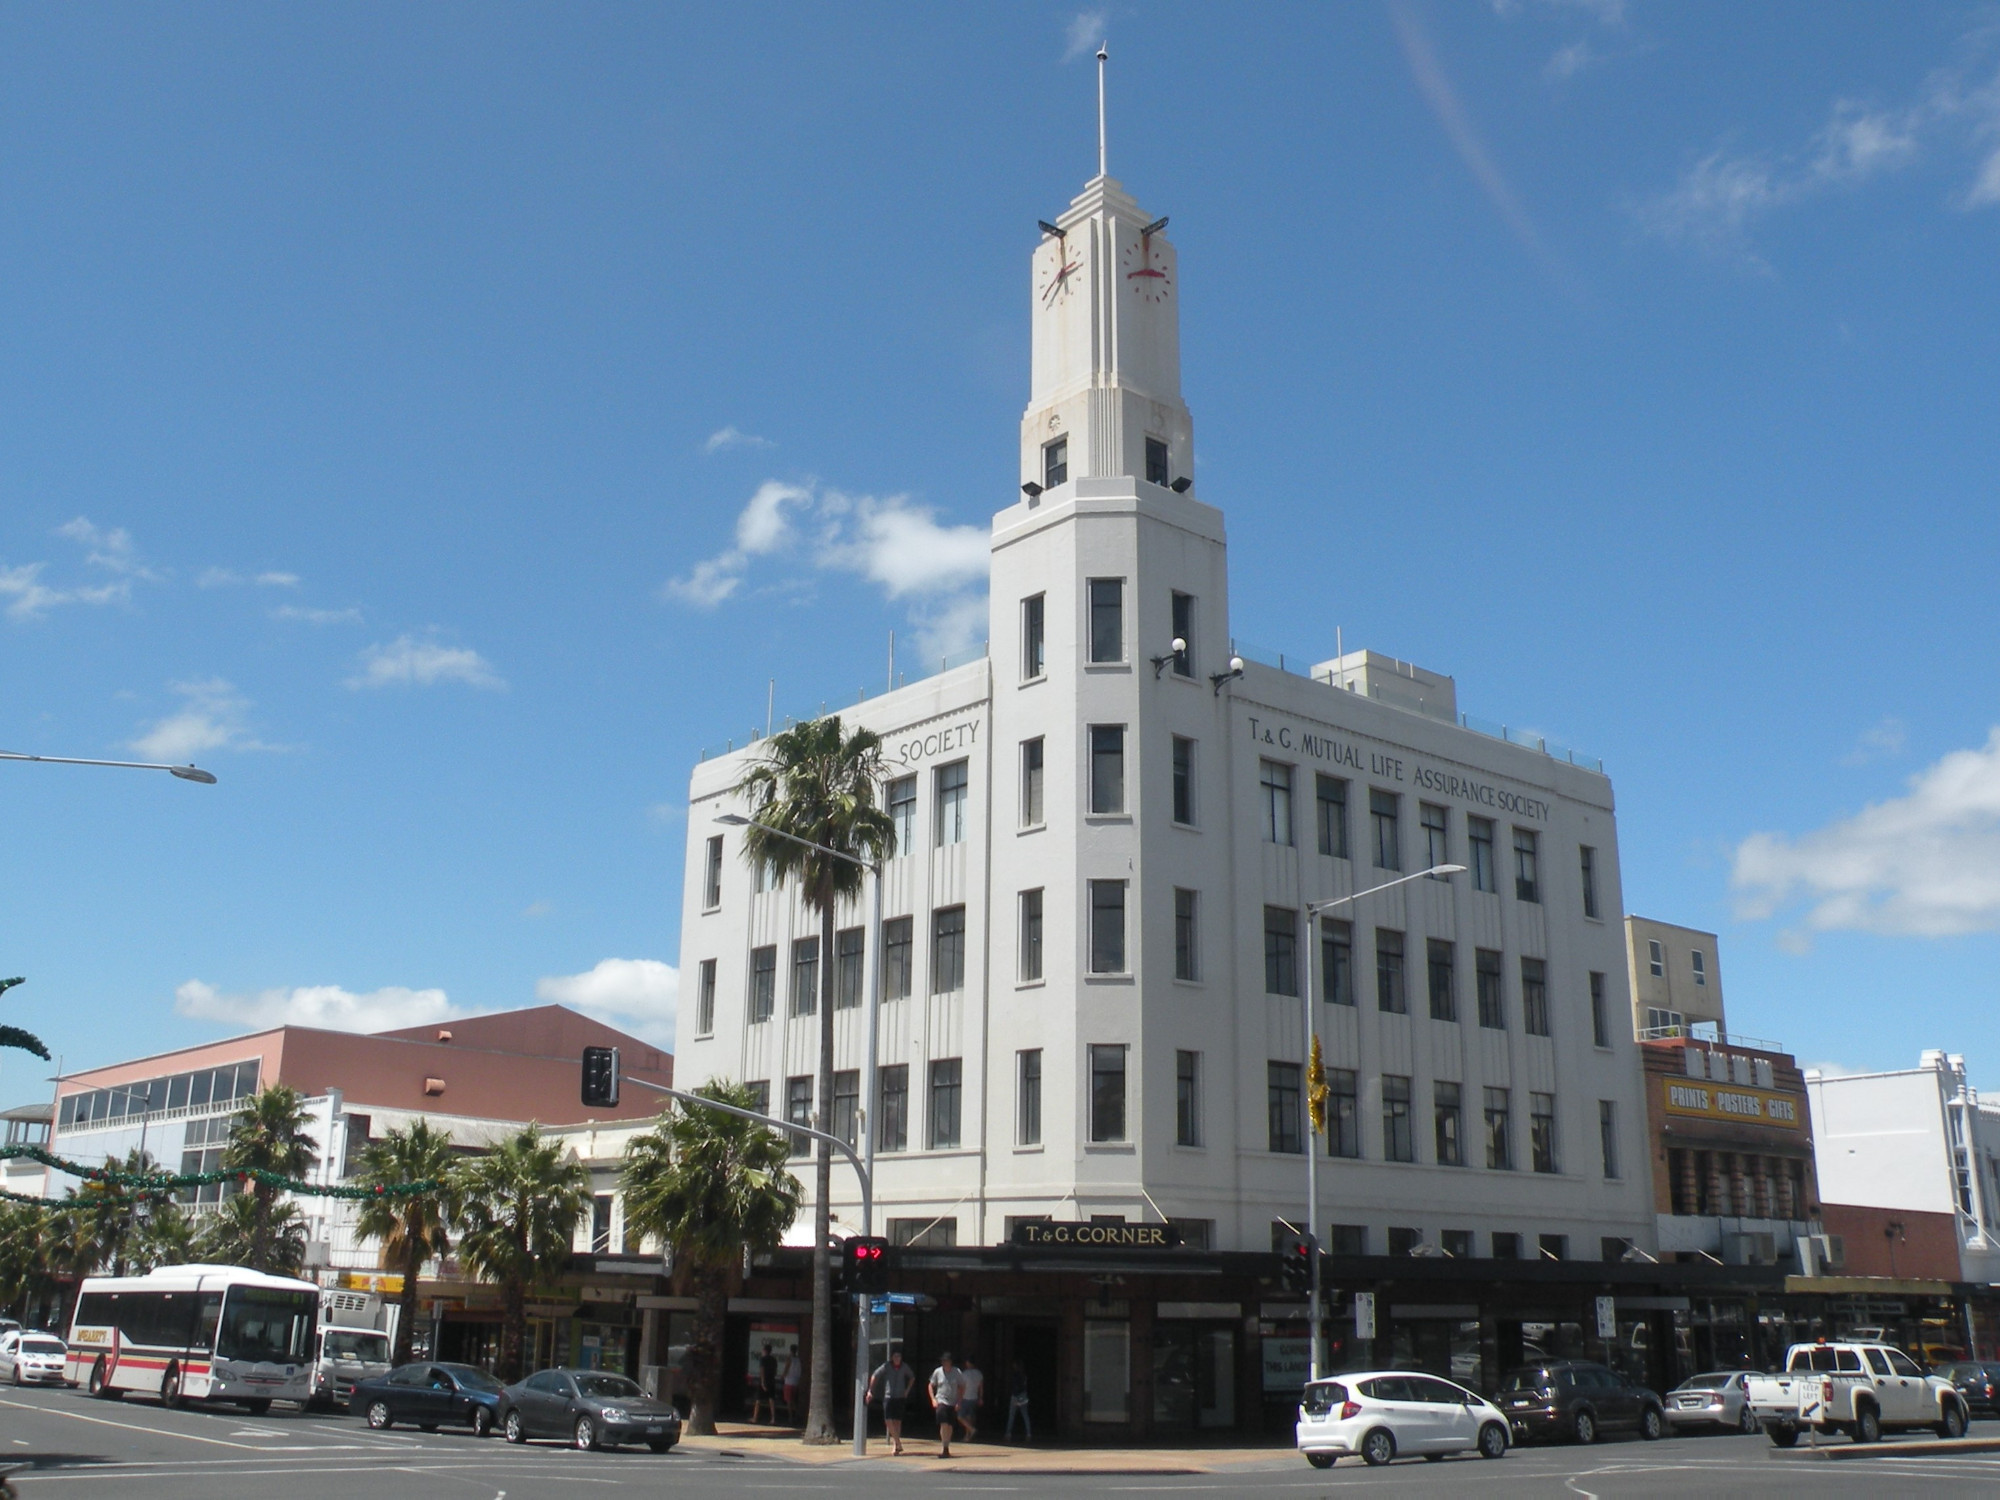 T & G Building, Geelong<br/>
Historical landmark